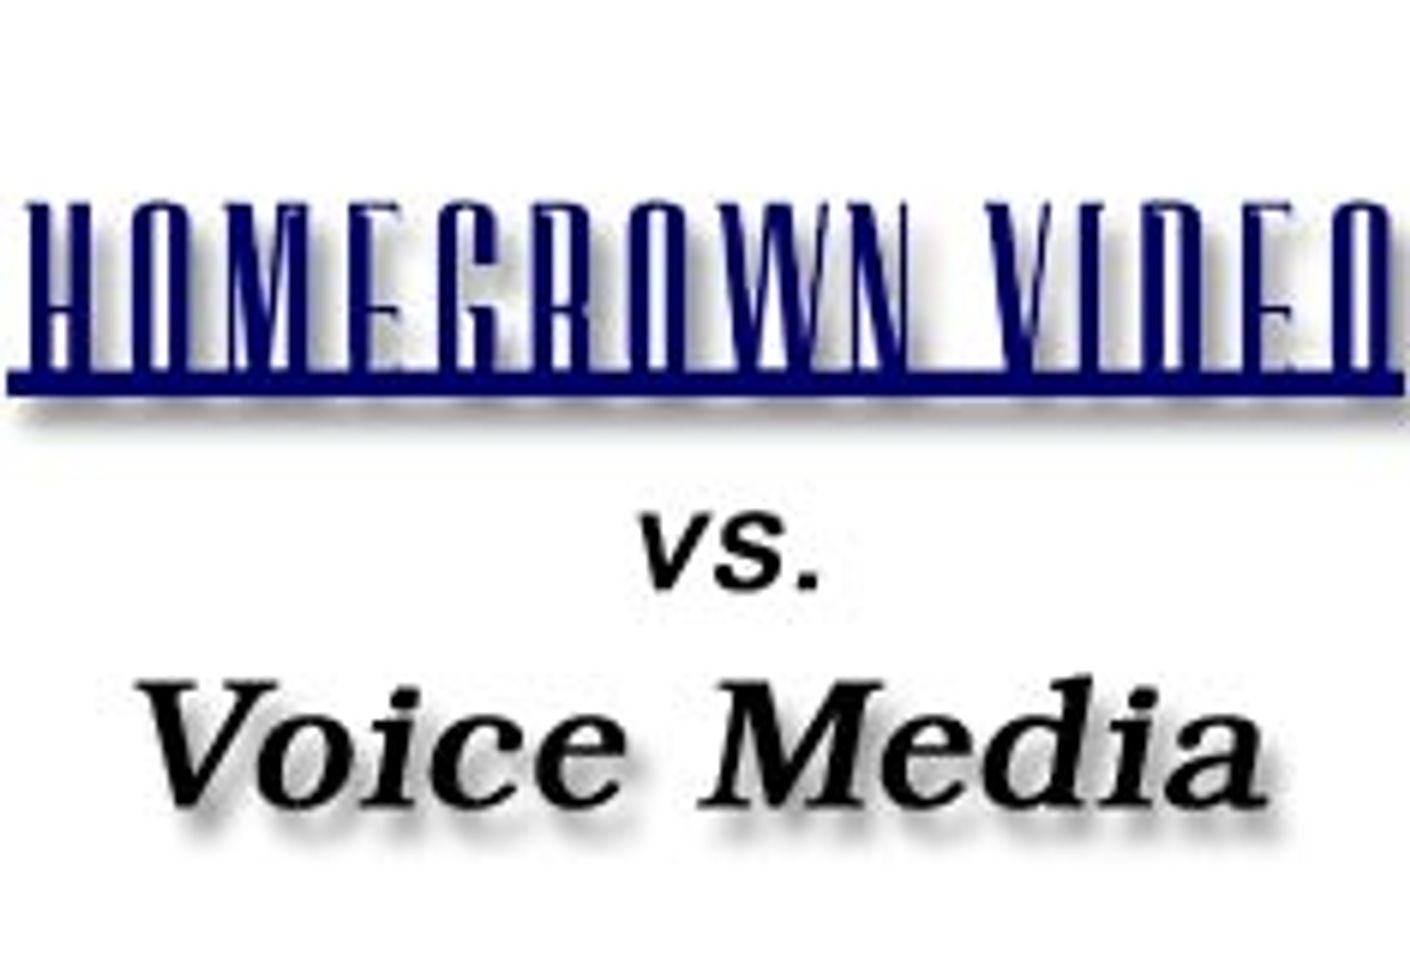 Homegrown Sues Voice Media For Infringement, Improper Practices